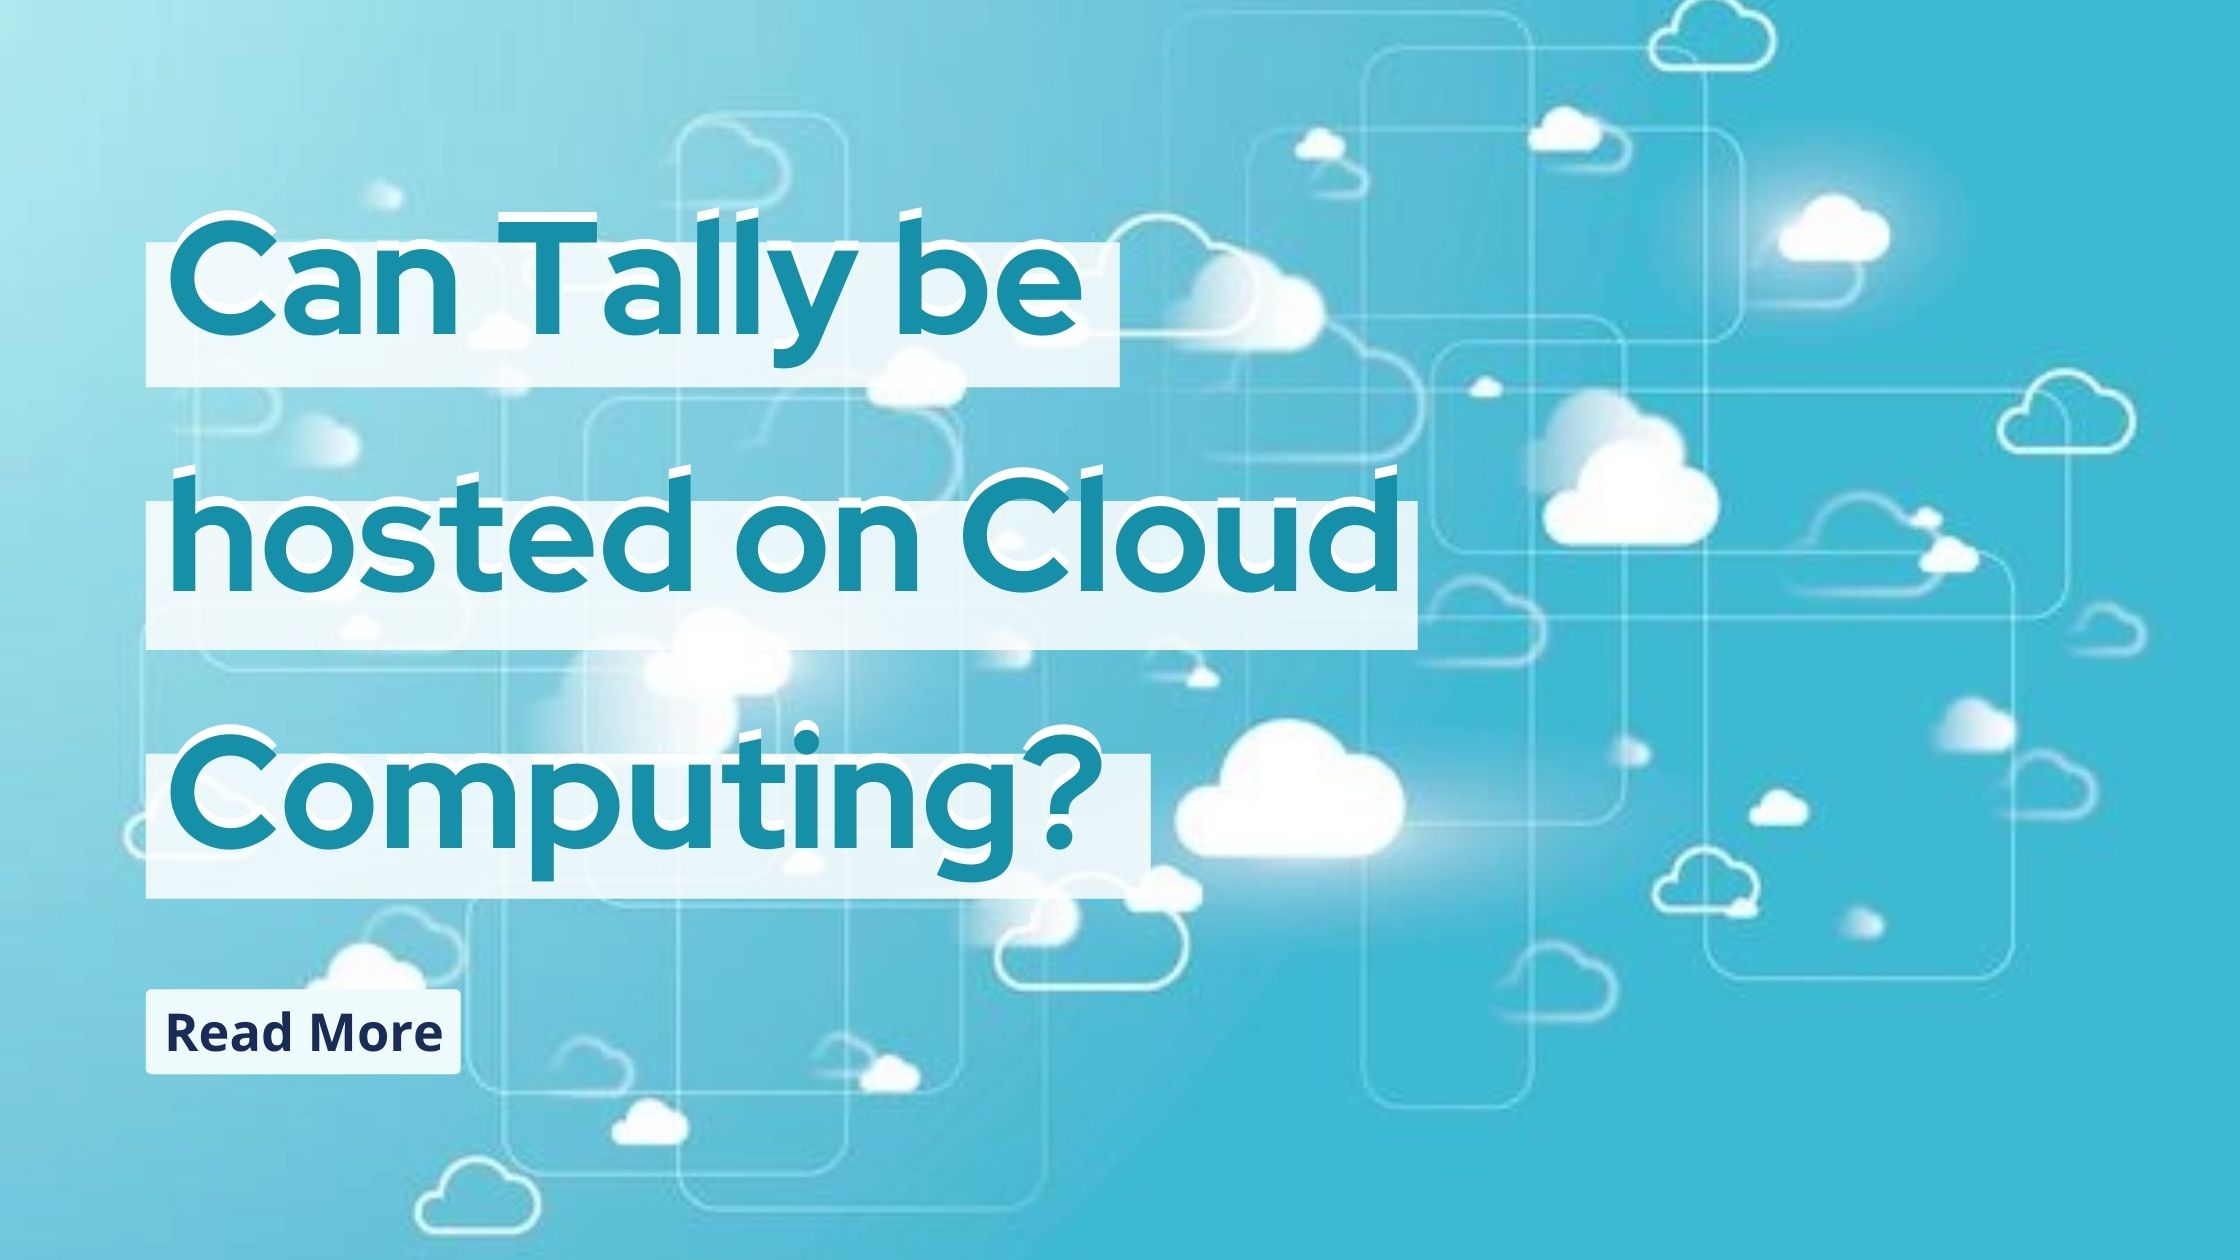 Tally on Cloud computing